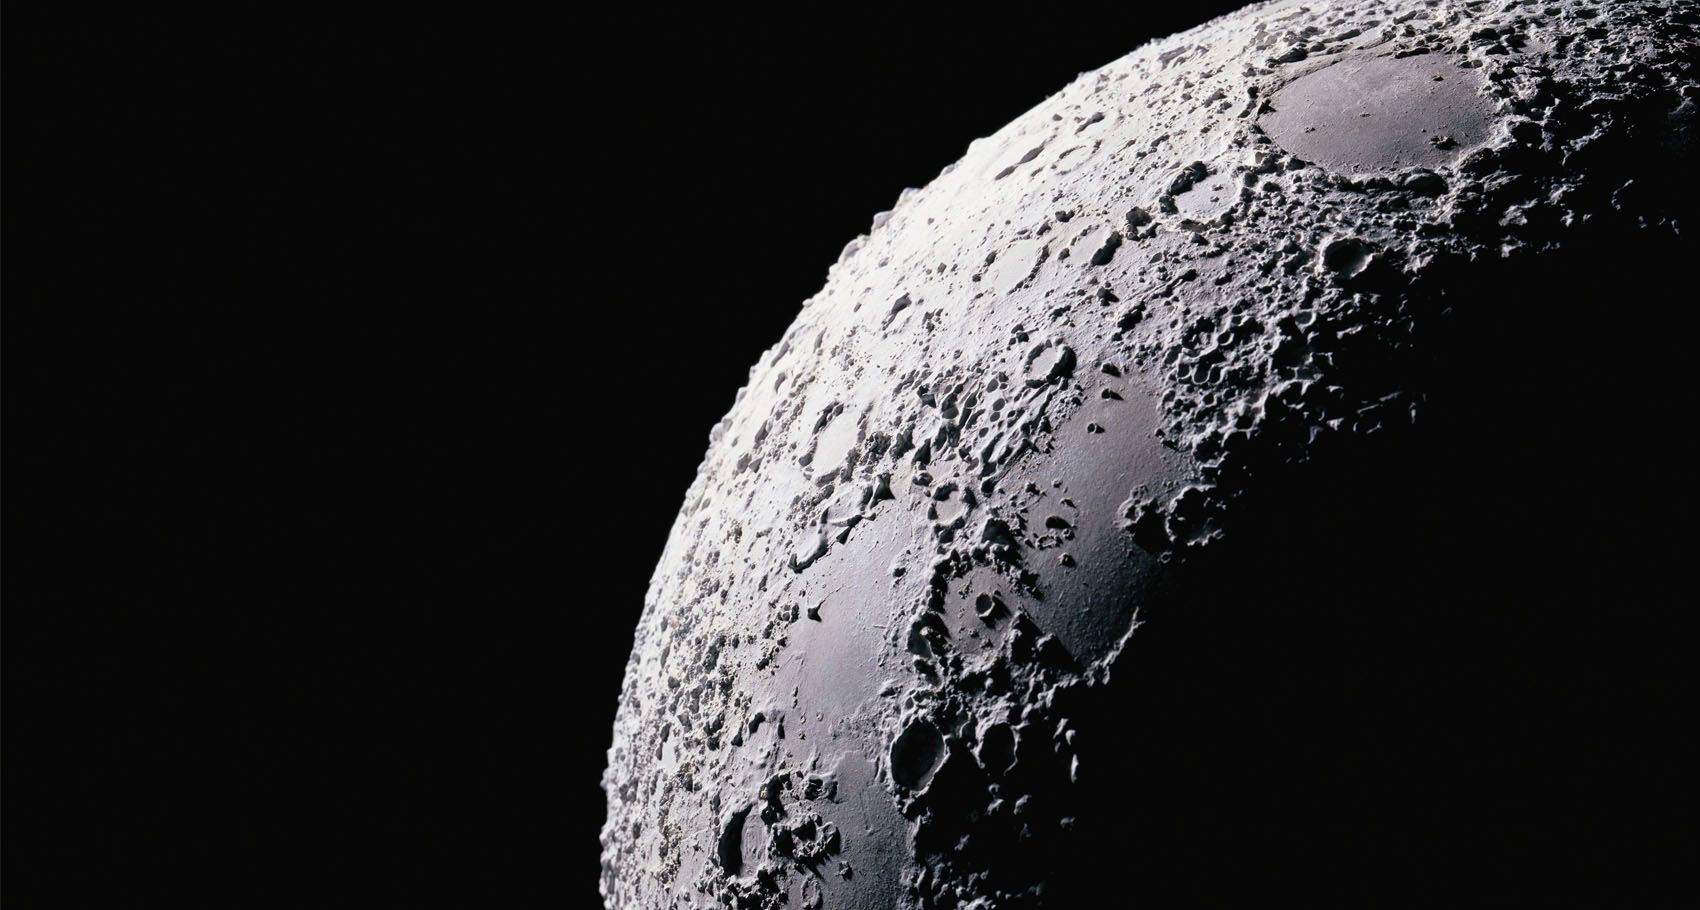 The Darkest Side Of The Moon by Tayler Macneill